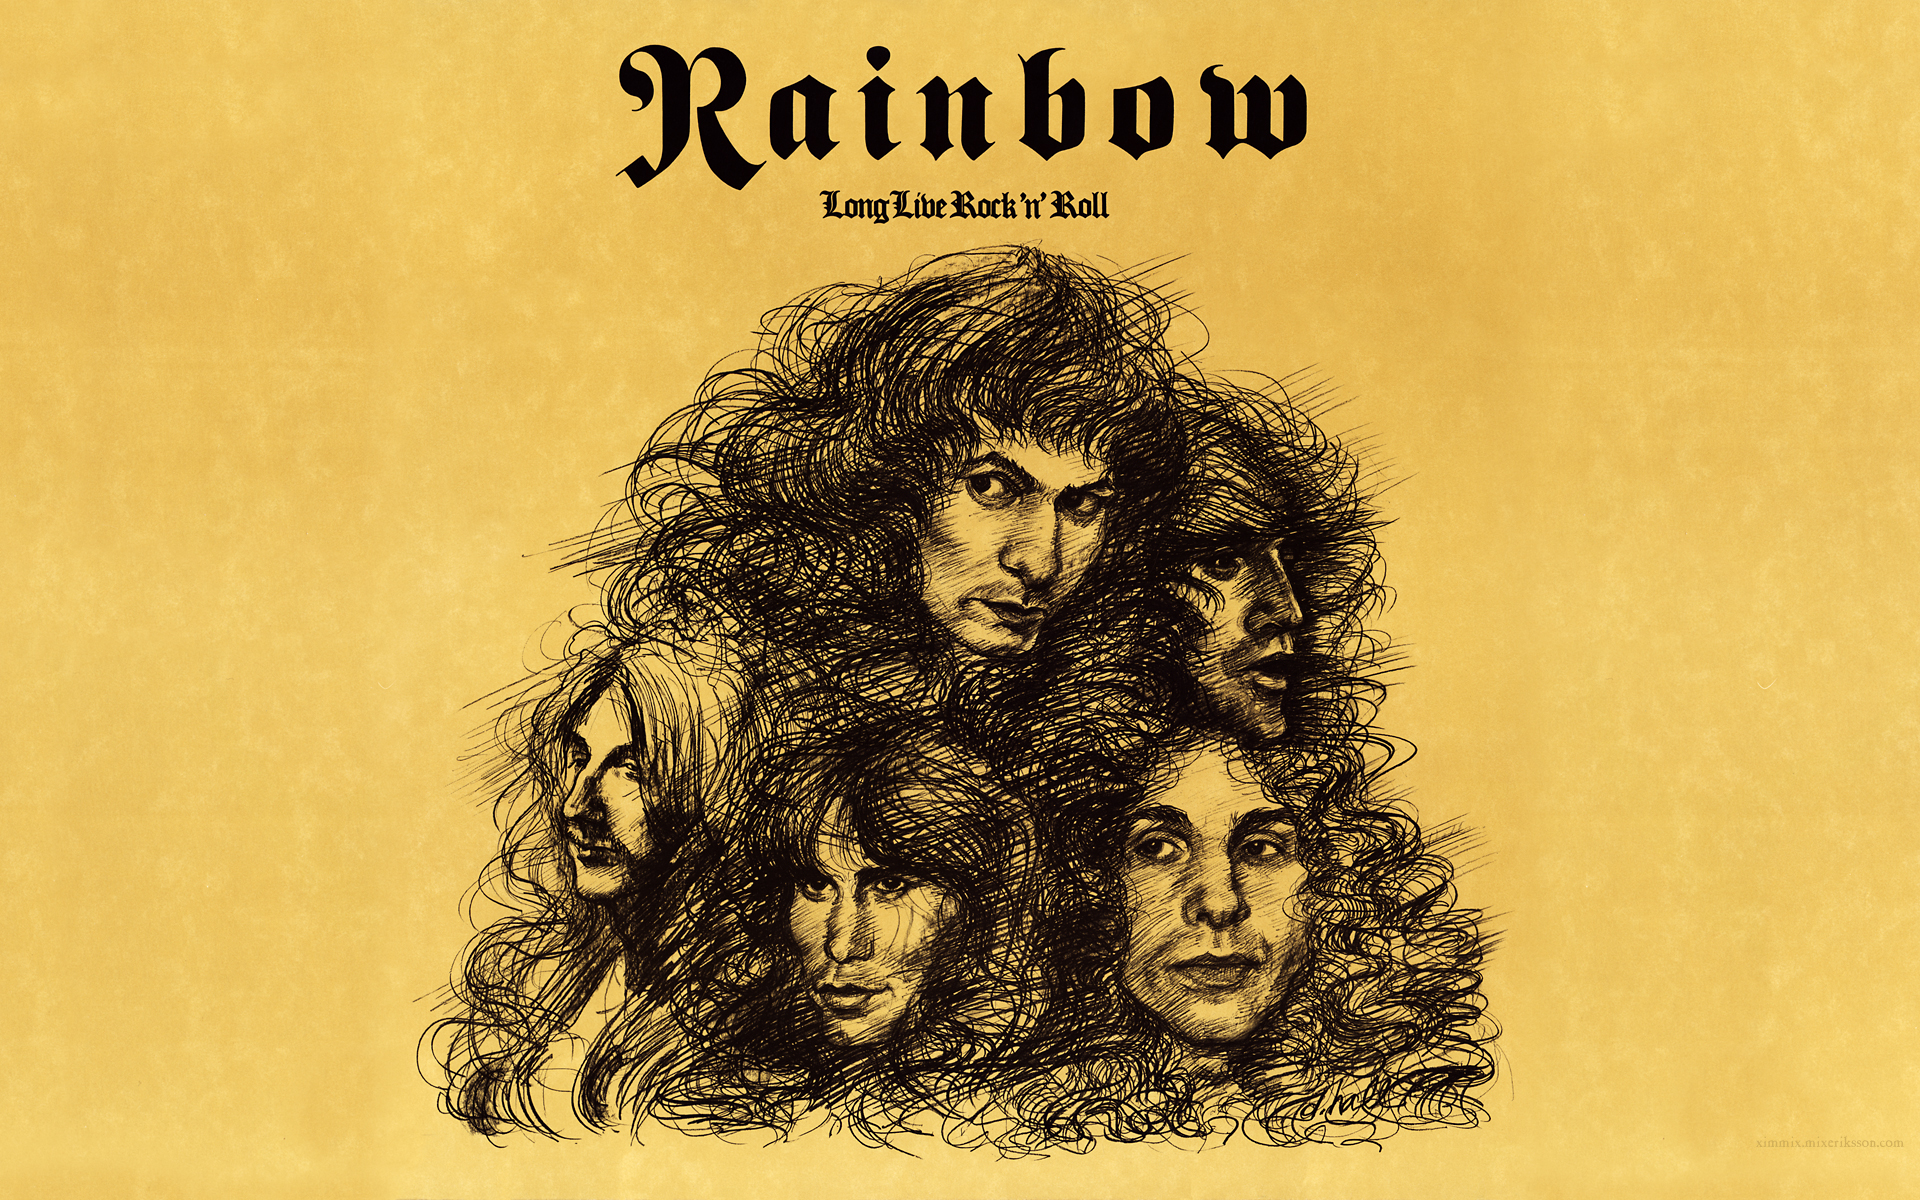  1920x1200 px Ritchie Blackmores Rainbow Rising Long Live RocknRoll 1920x1200